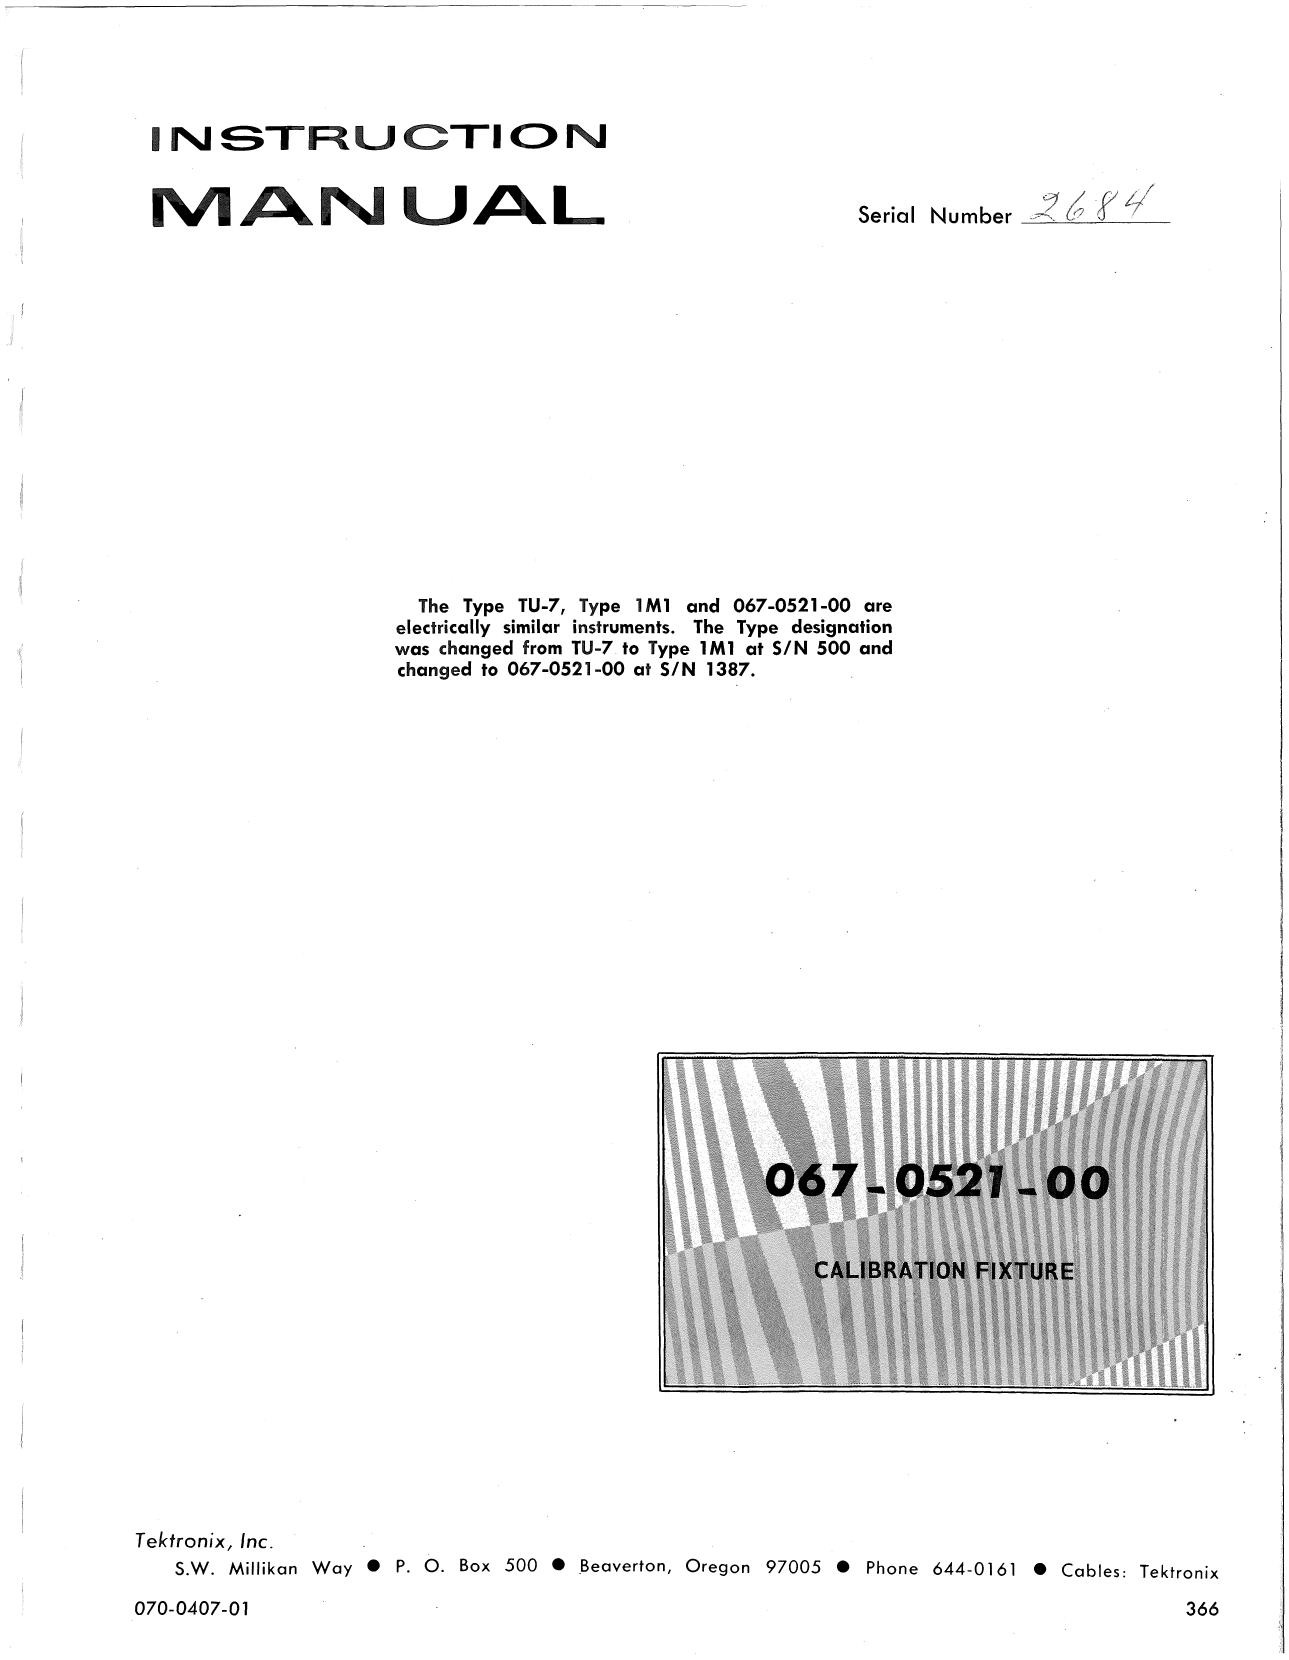 Tektronix TEK 305 Oscilloscope Service Manual With Complete 17"x11" Diagrams CD 